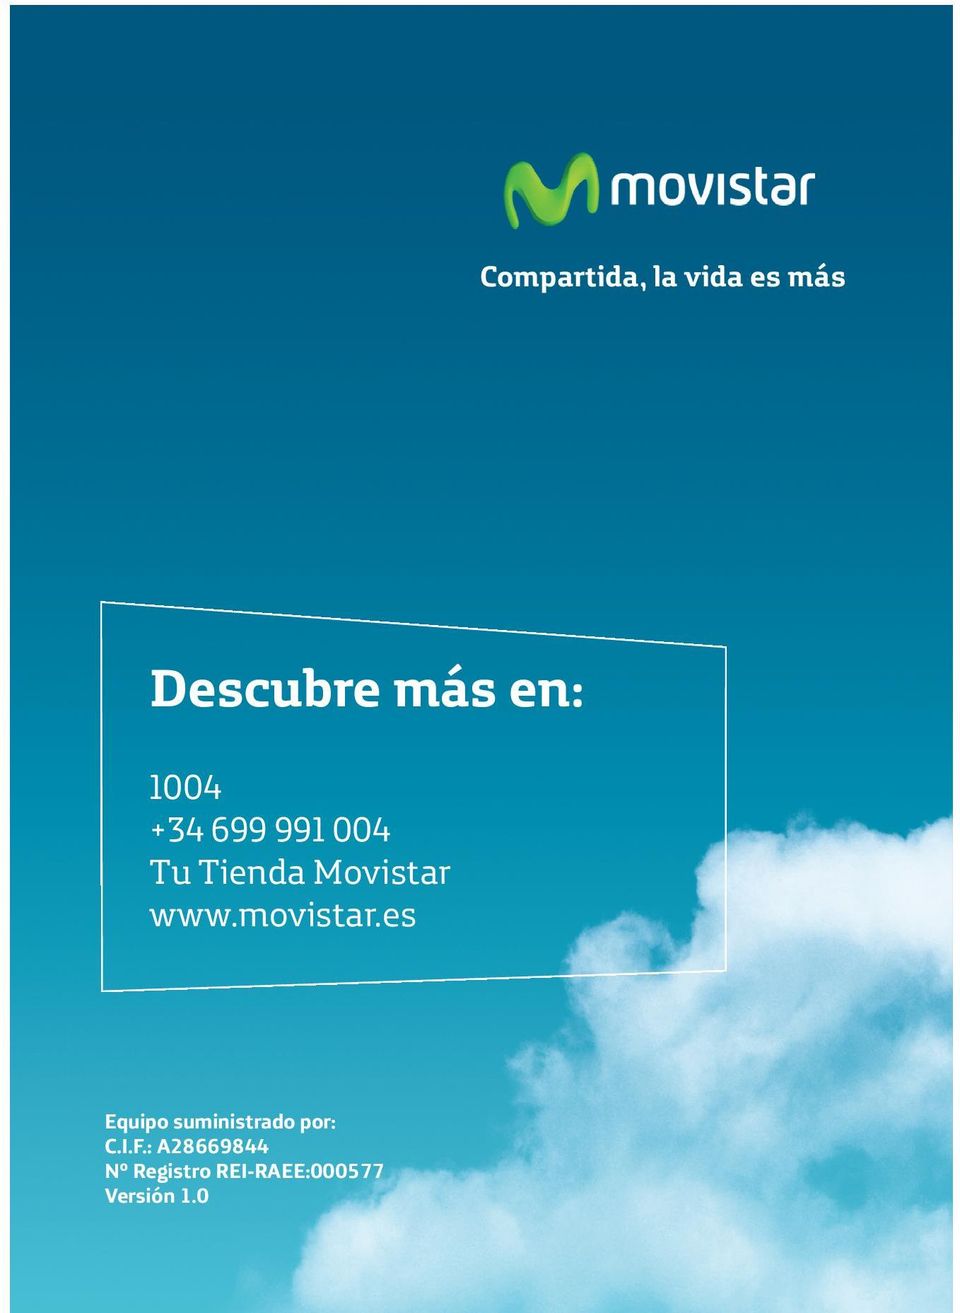 movistar.es Equipo suministrado por: C.I.F.